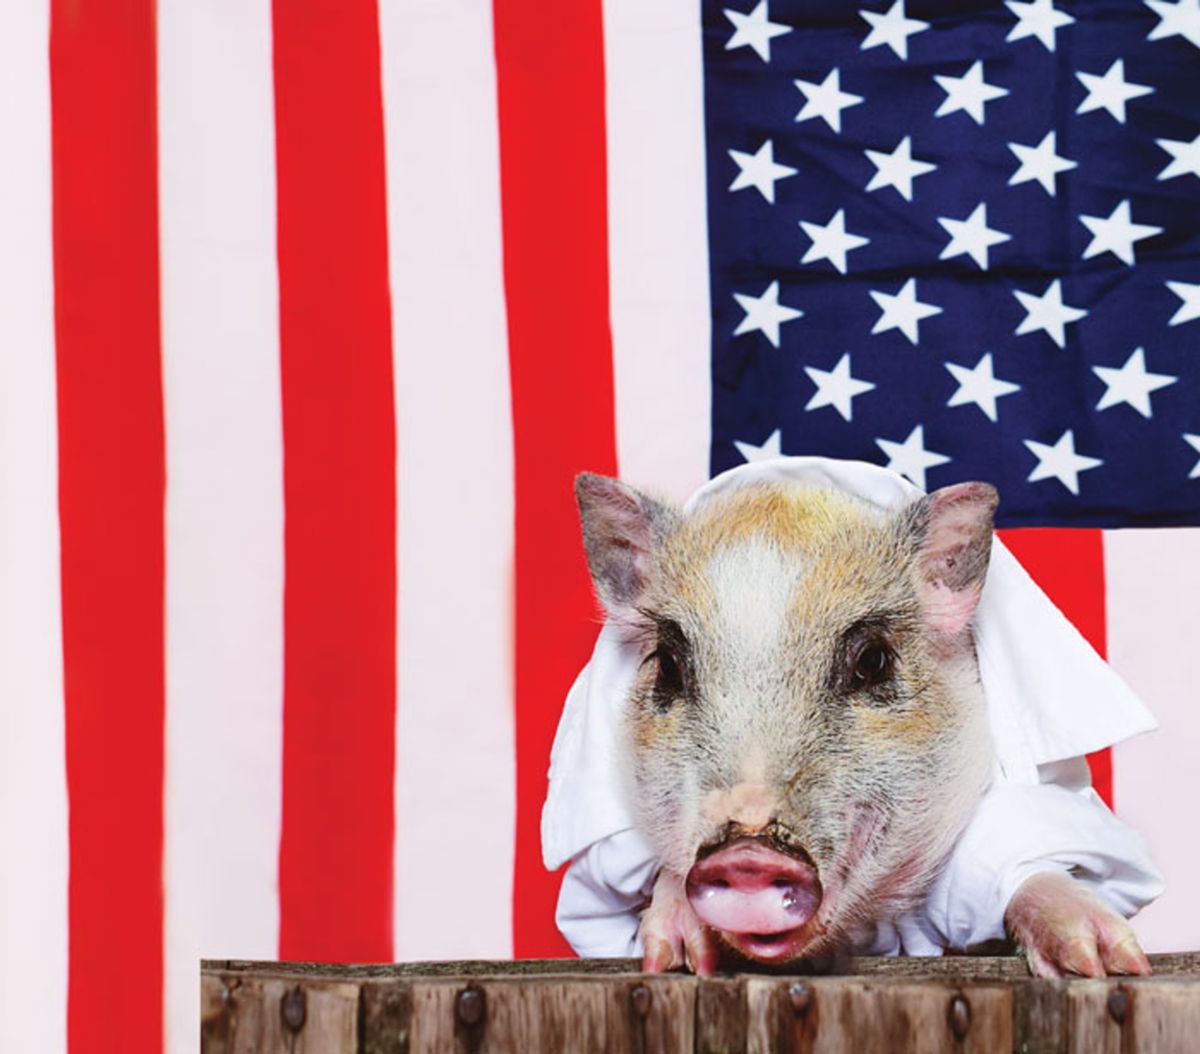 Political Pig